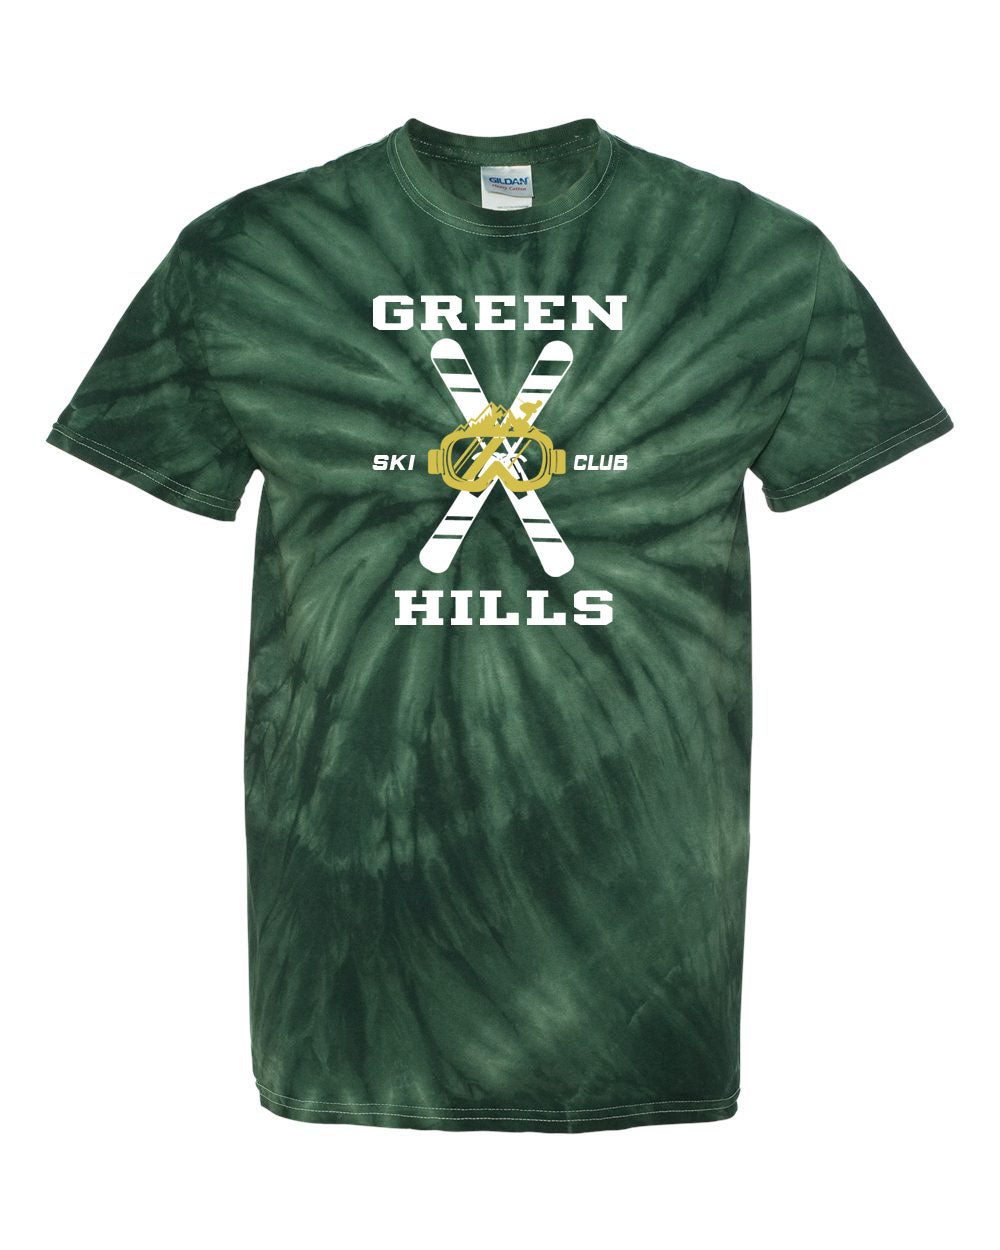 Green Hills Ski Club Tie Dye t-shirt Design 2